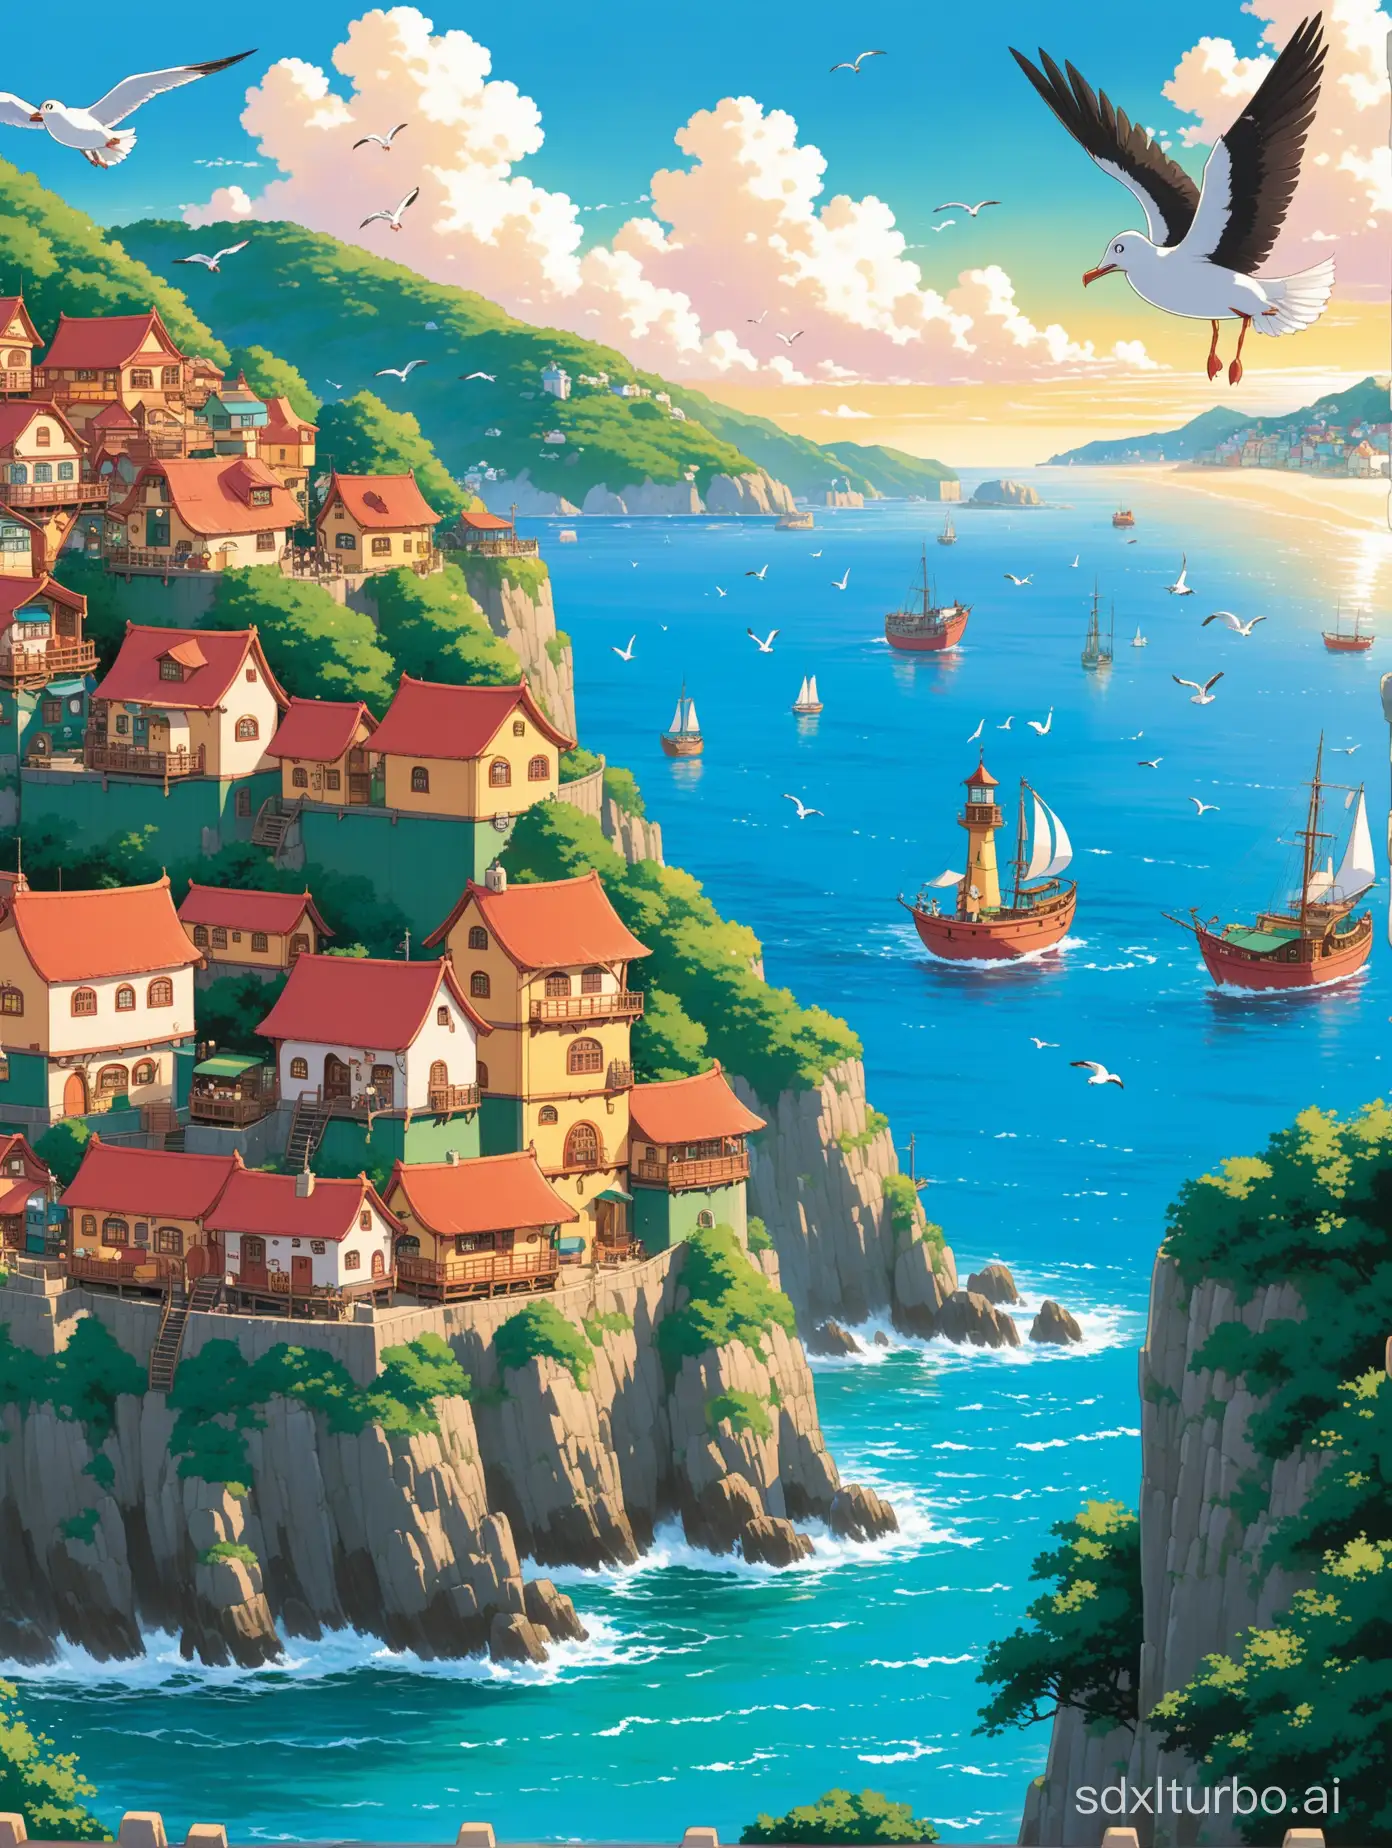 Whimsical-Seaside-Village-by-Ghibli-Colorful-Cliffside-Scene-Inspired-by-Studio-Ghibli